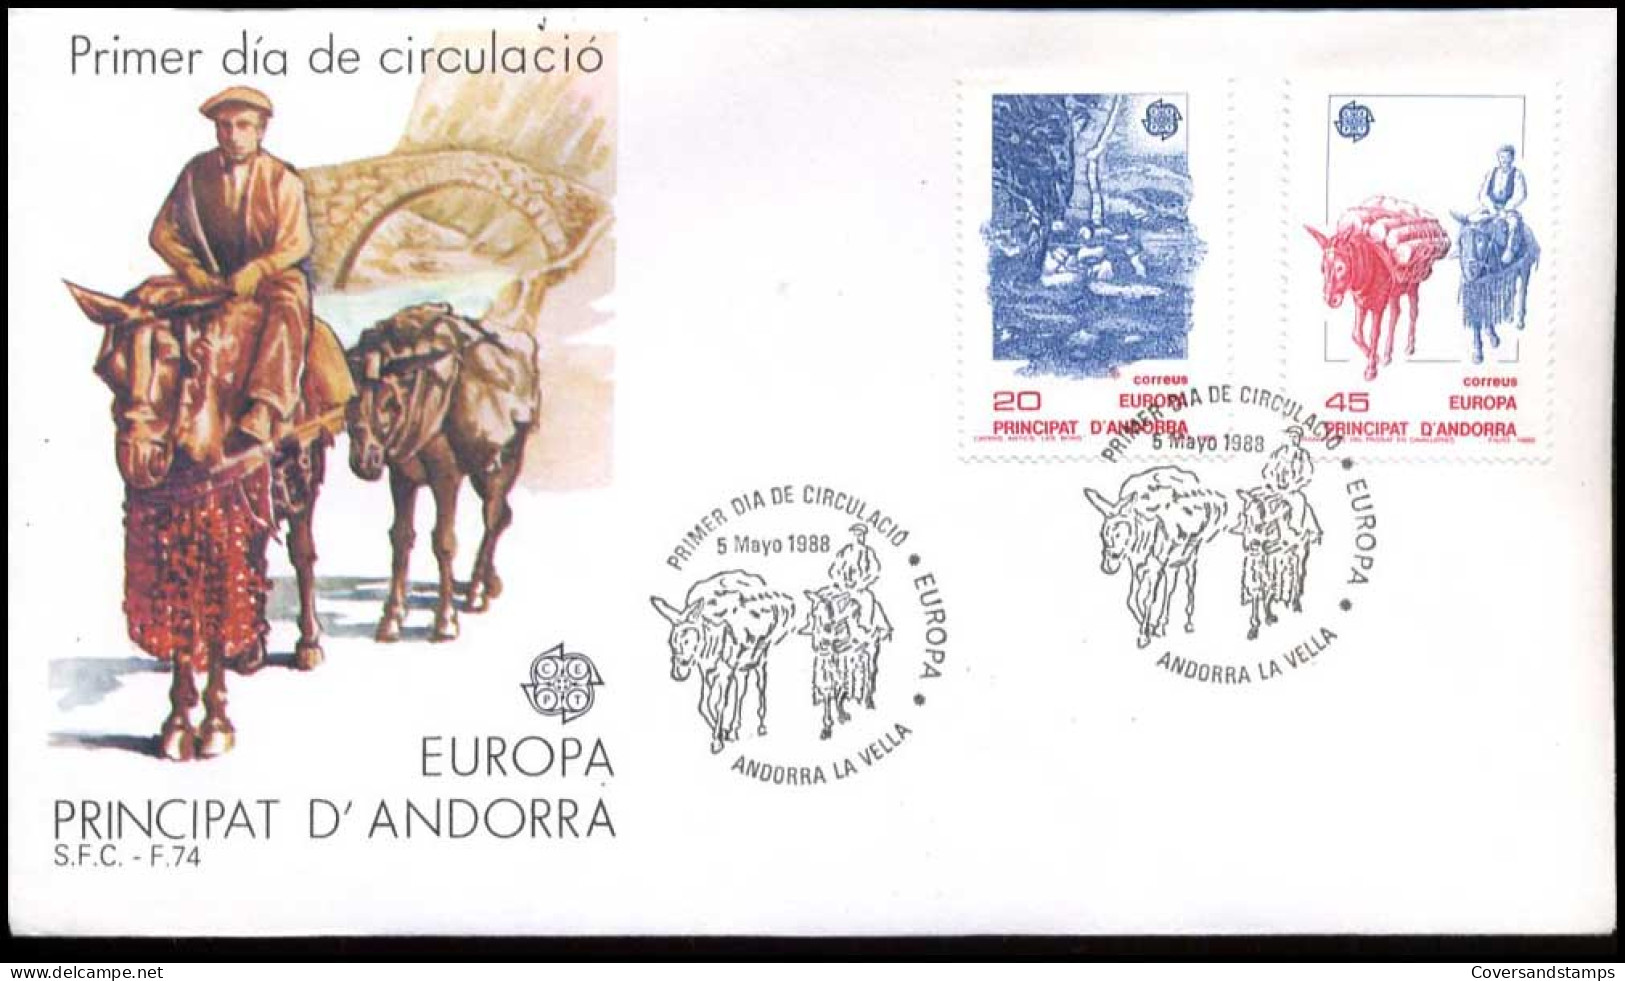  Spaans Andorra - FDC - Europa CEPT 1988 - 1988